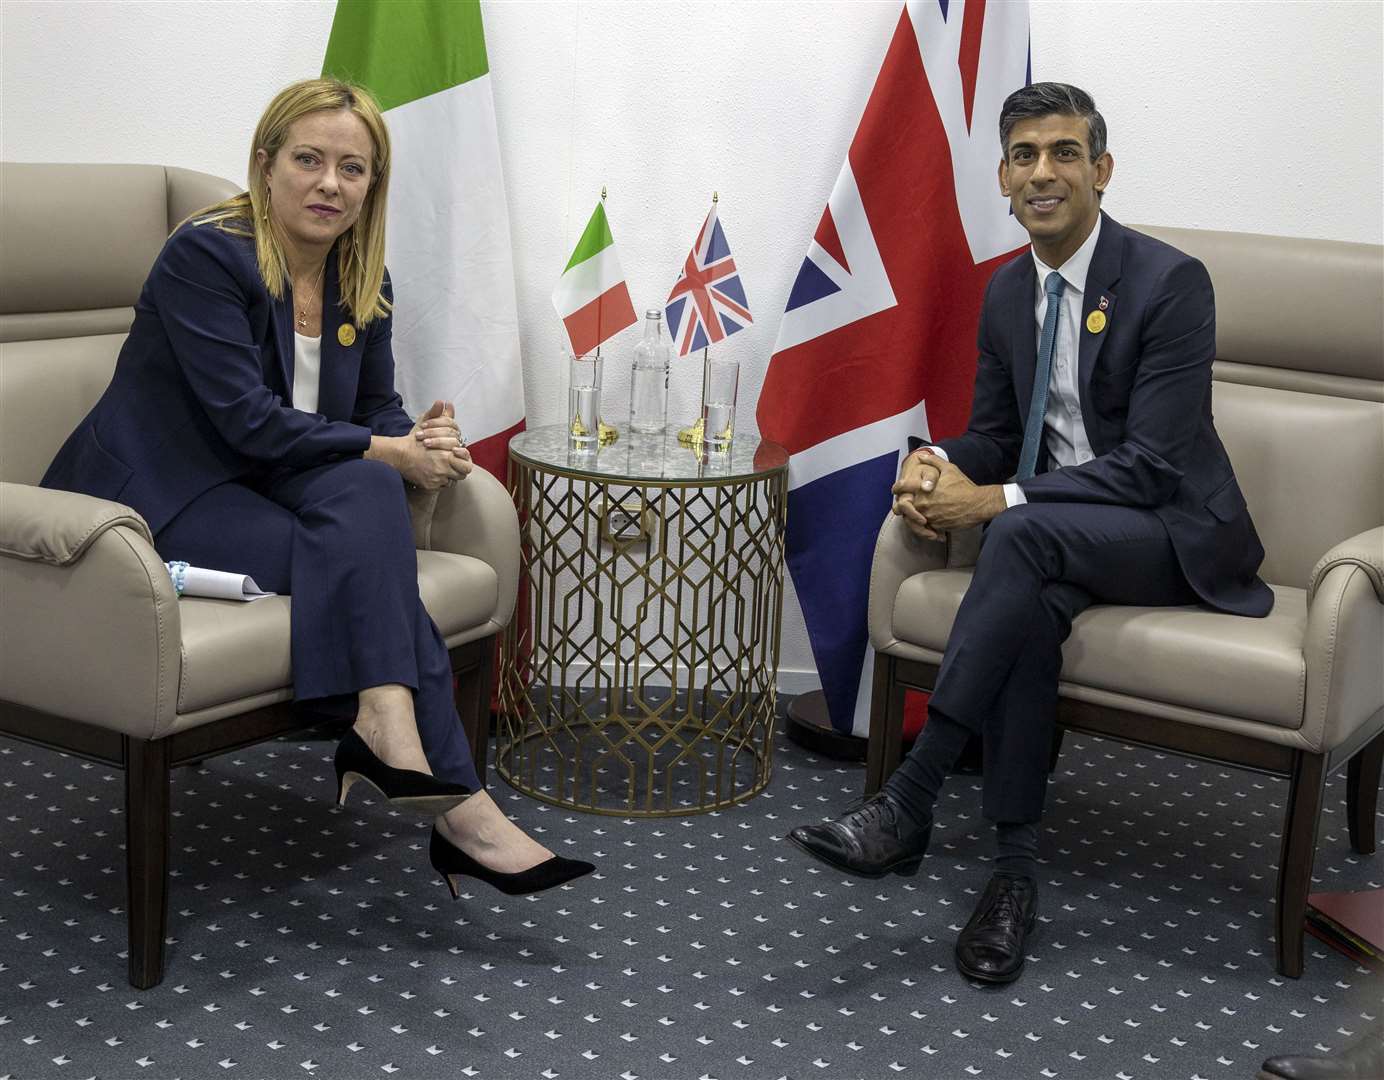 Rishi Sunak meets Italian Prime Minister Giorgia Meloni during the summit (Steve Reigate/Daily Express/PA)